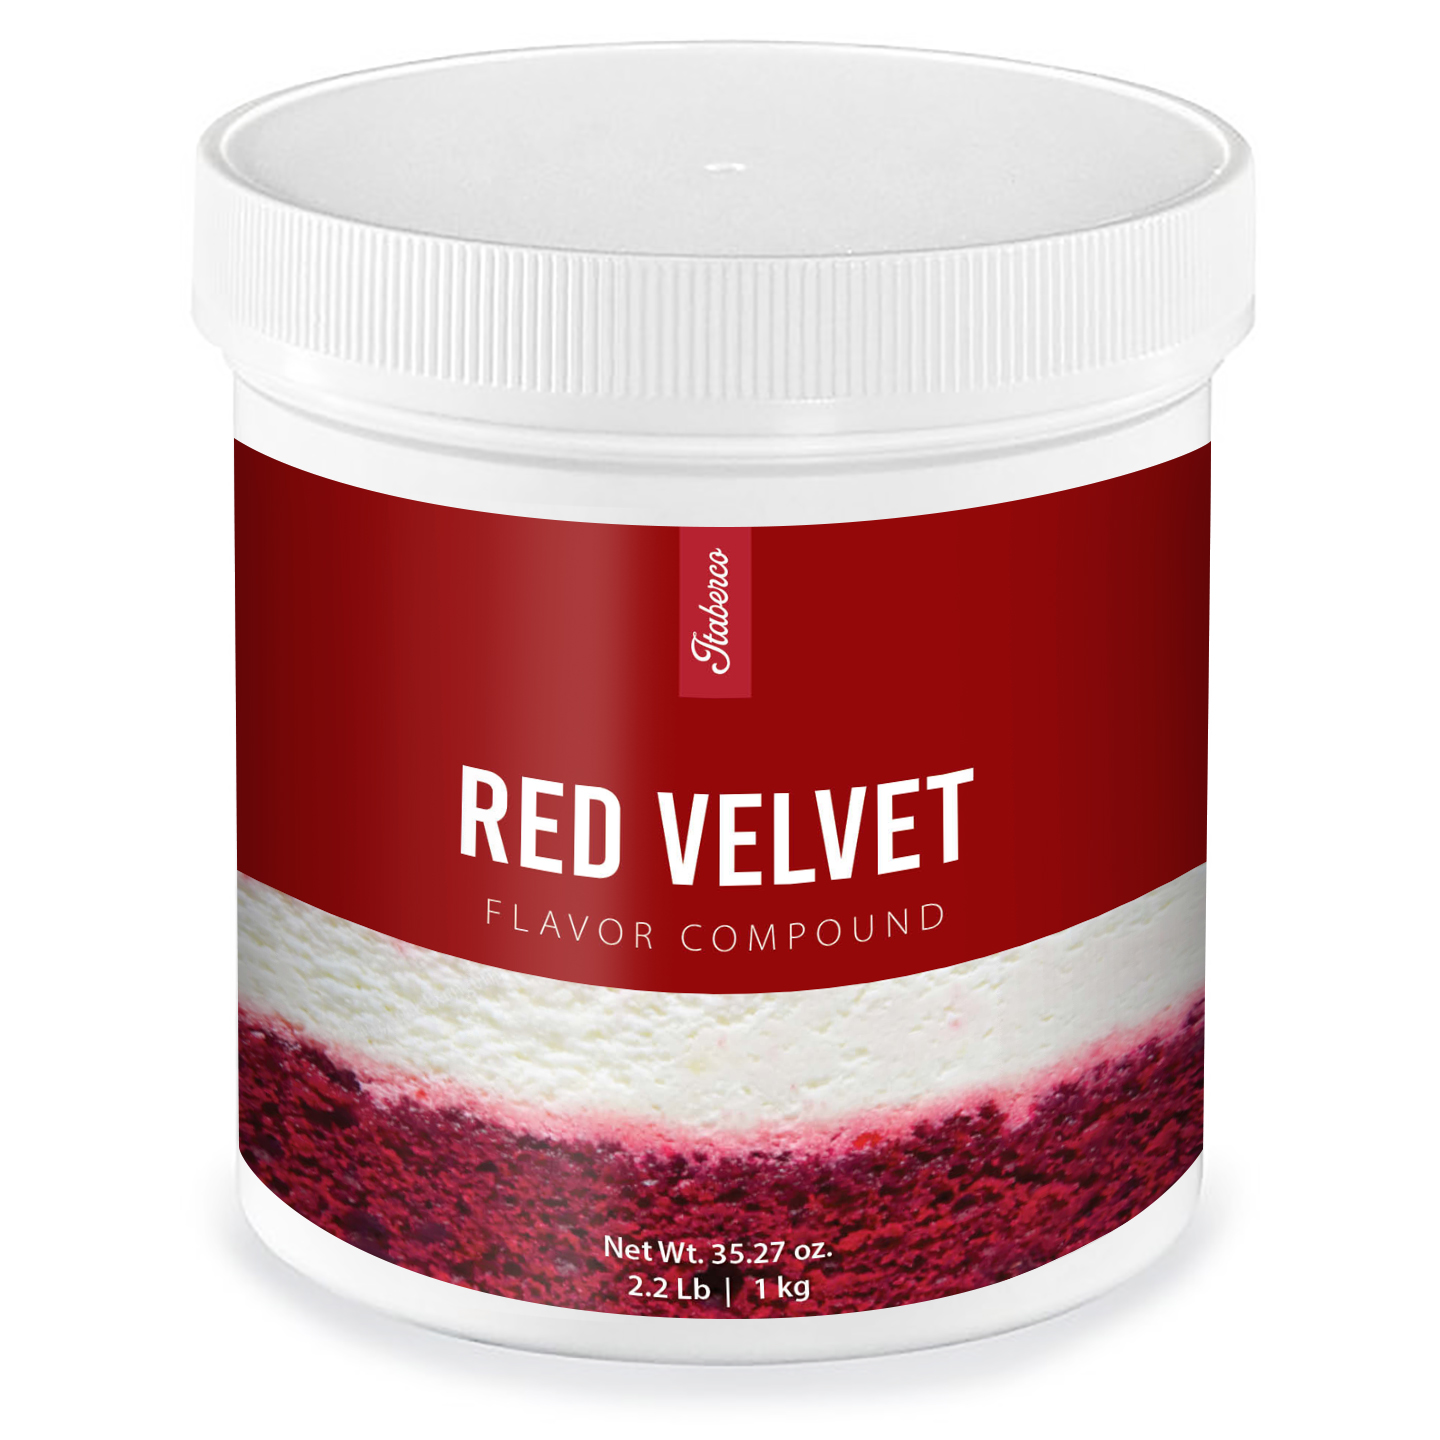 Red Velvet Flavor Compound